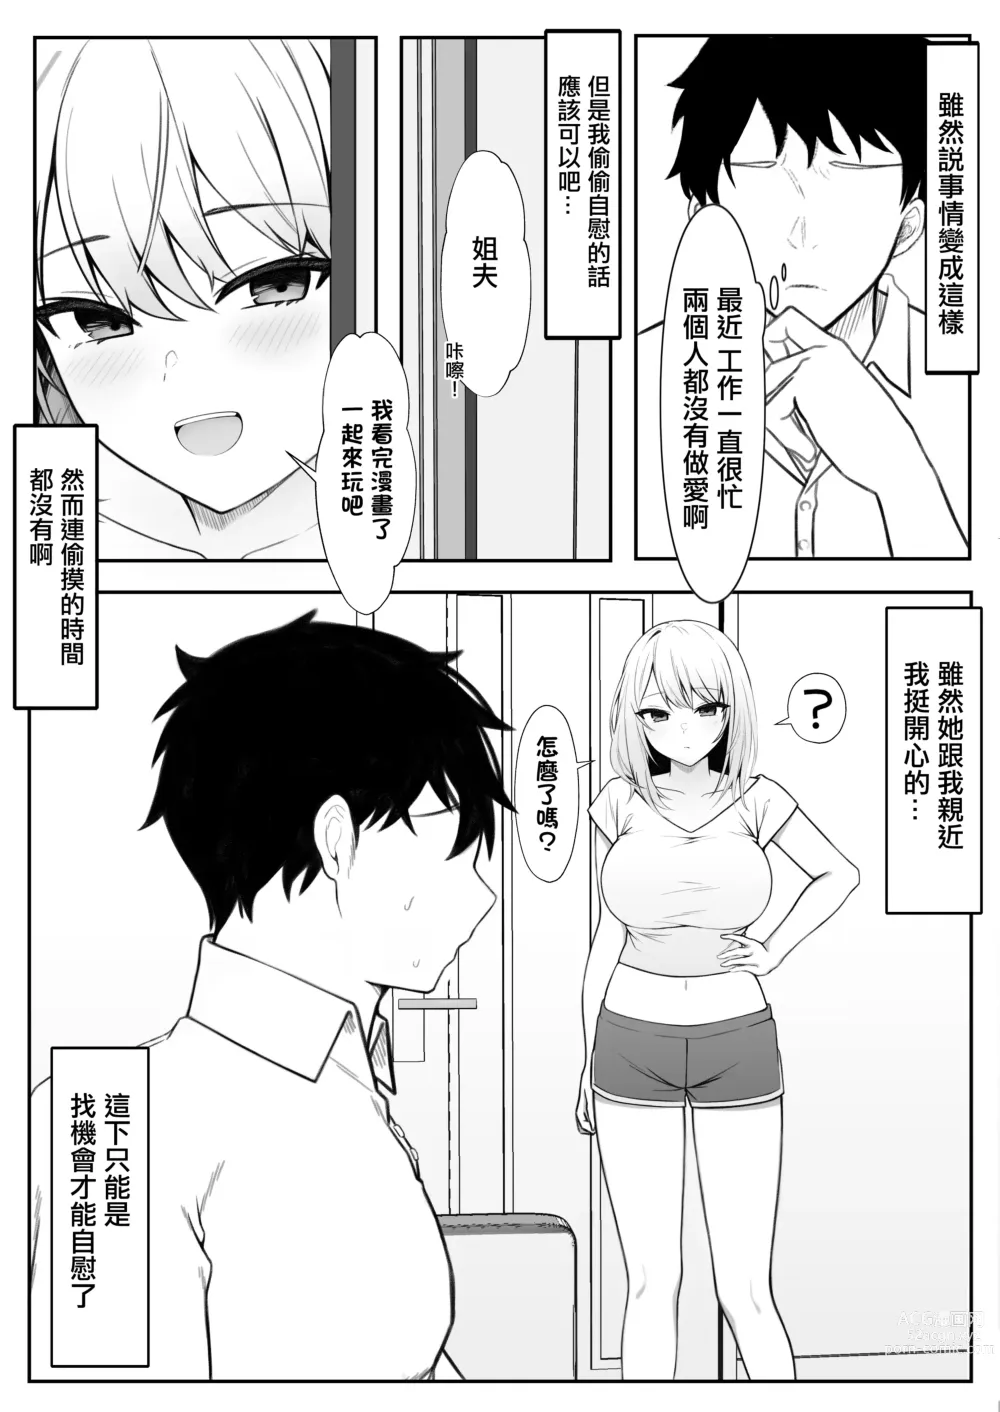 Page 5 of doujinshi 來到家裡的小姨子太色了瞞著妻子瘋狂做愛